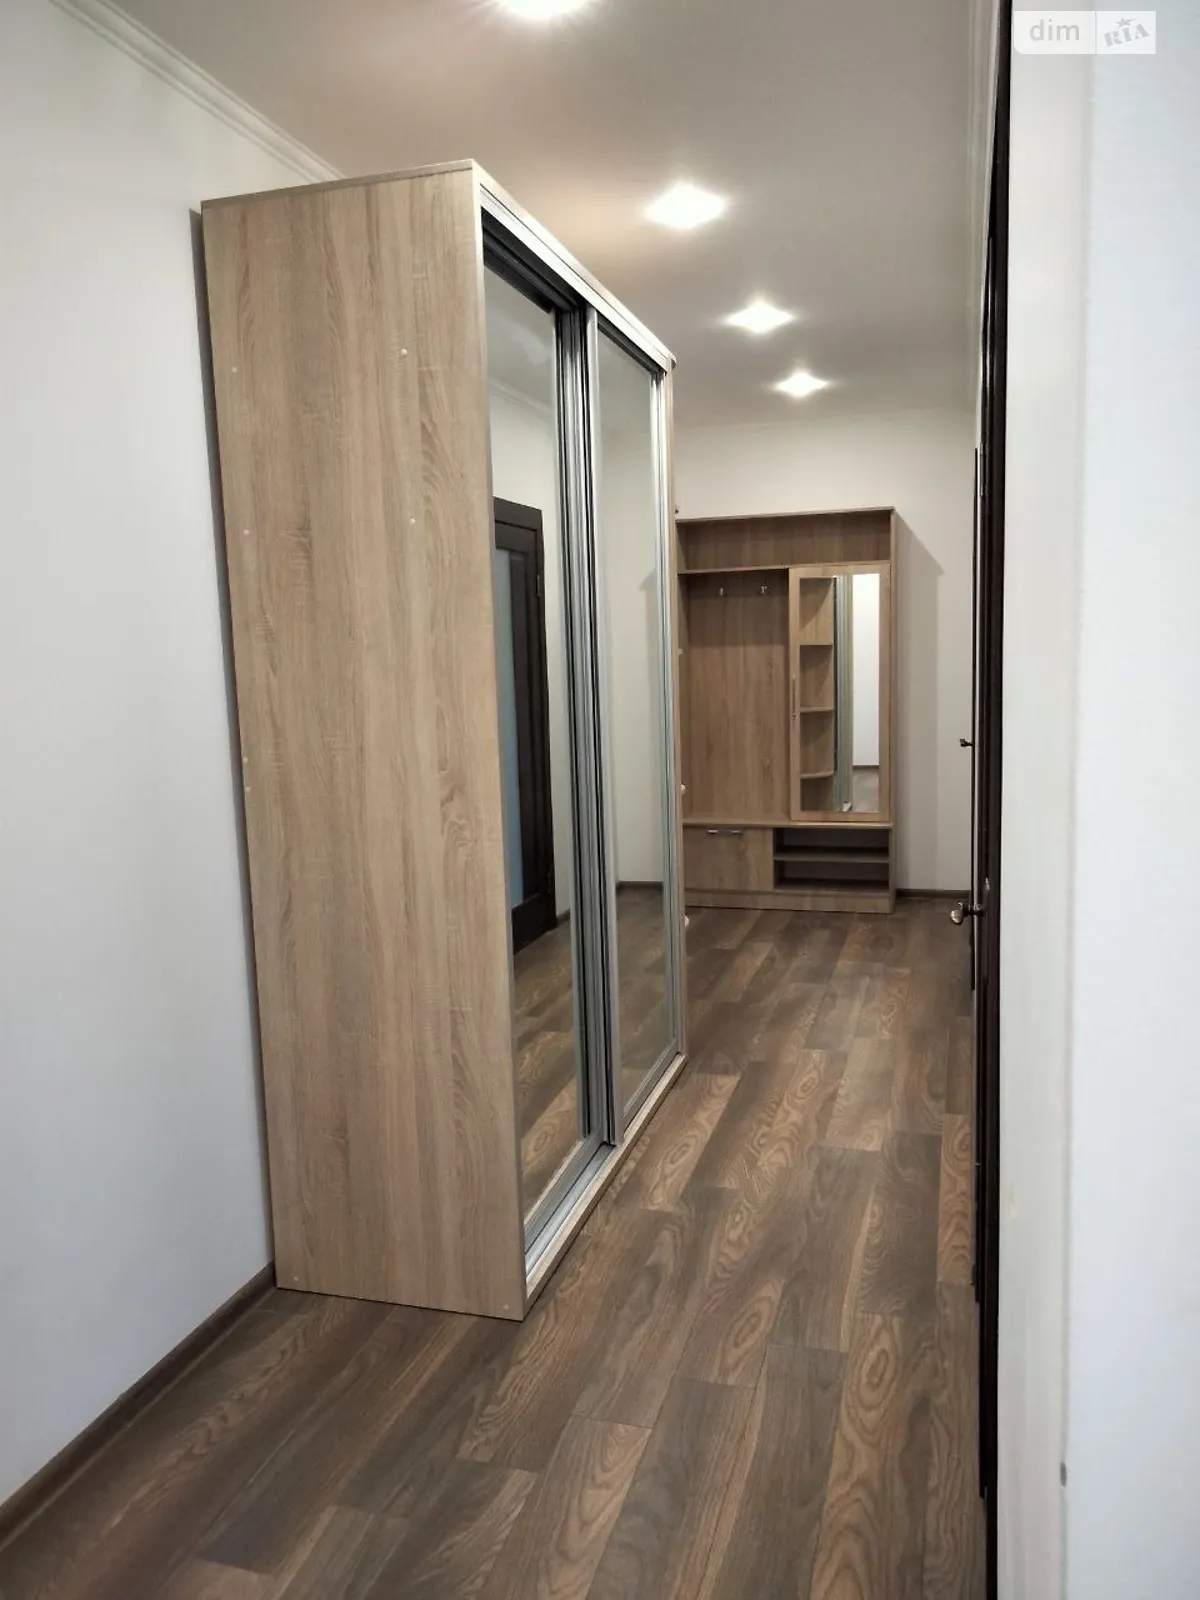 Сдается в аренду 2-комнатная квартира 72 кв. м в Ровно - фото 3